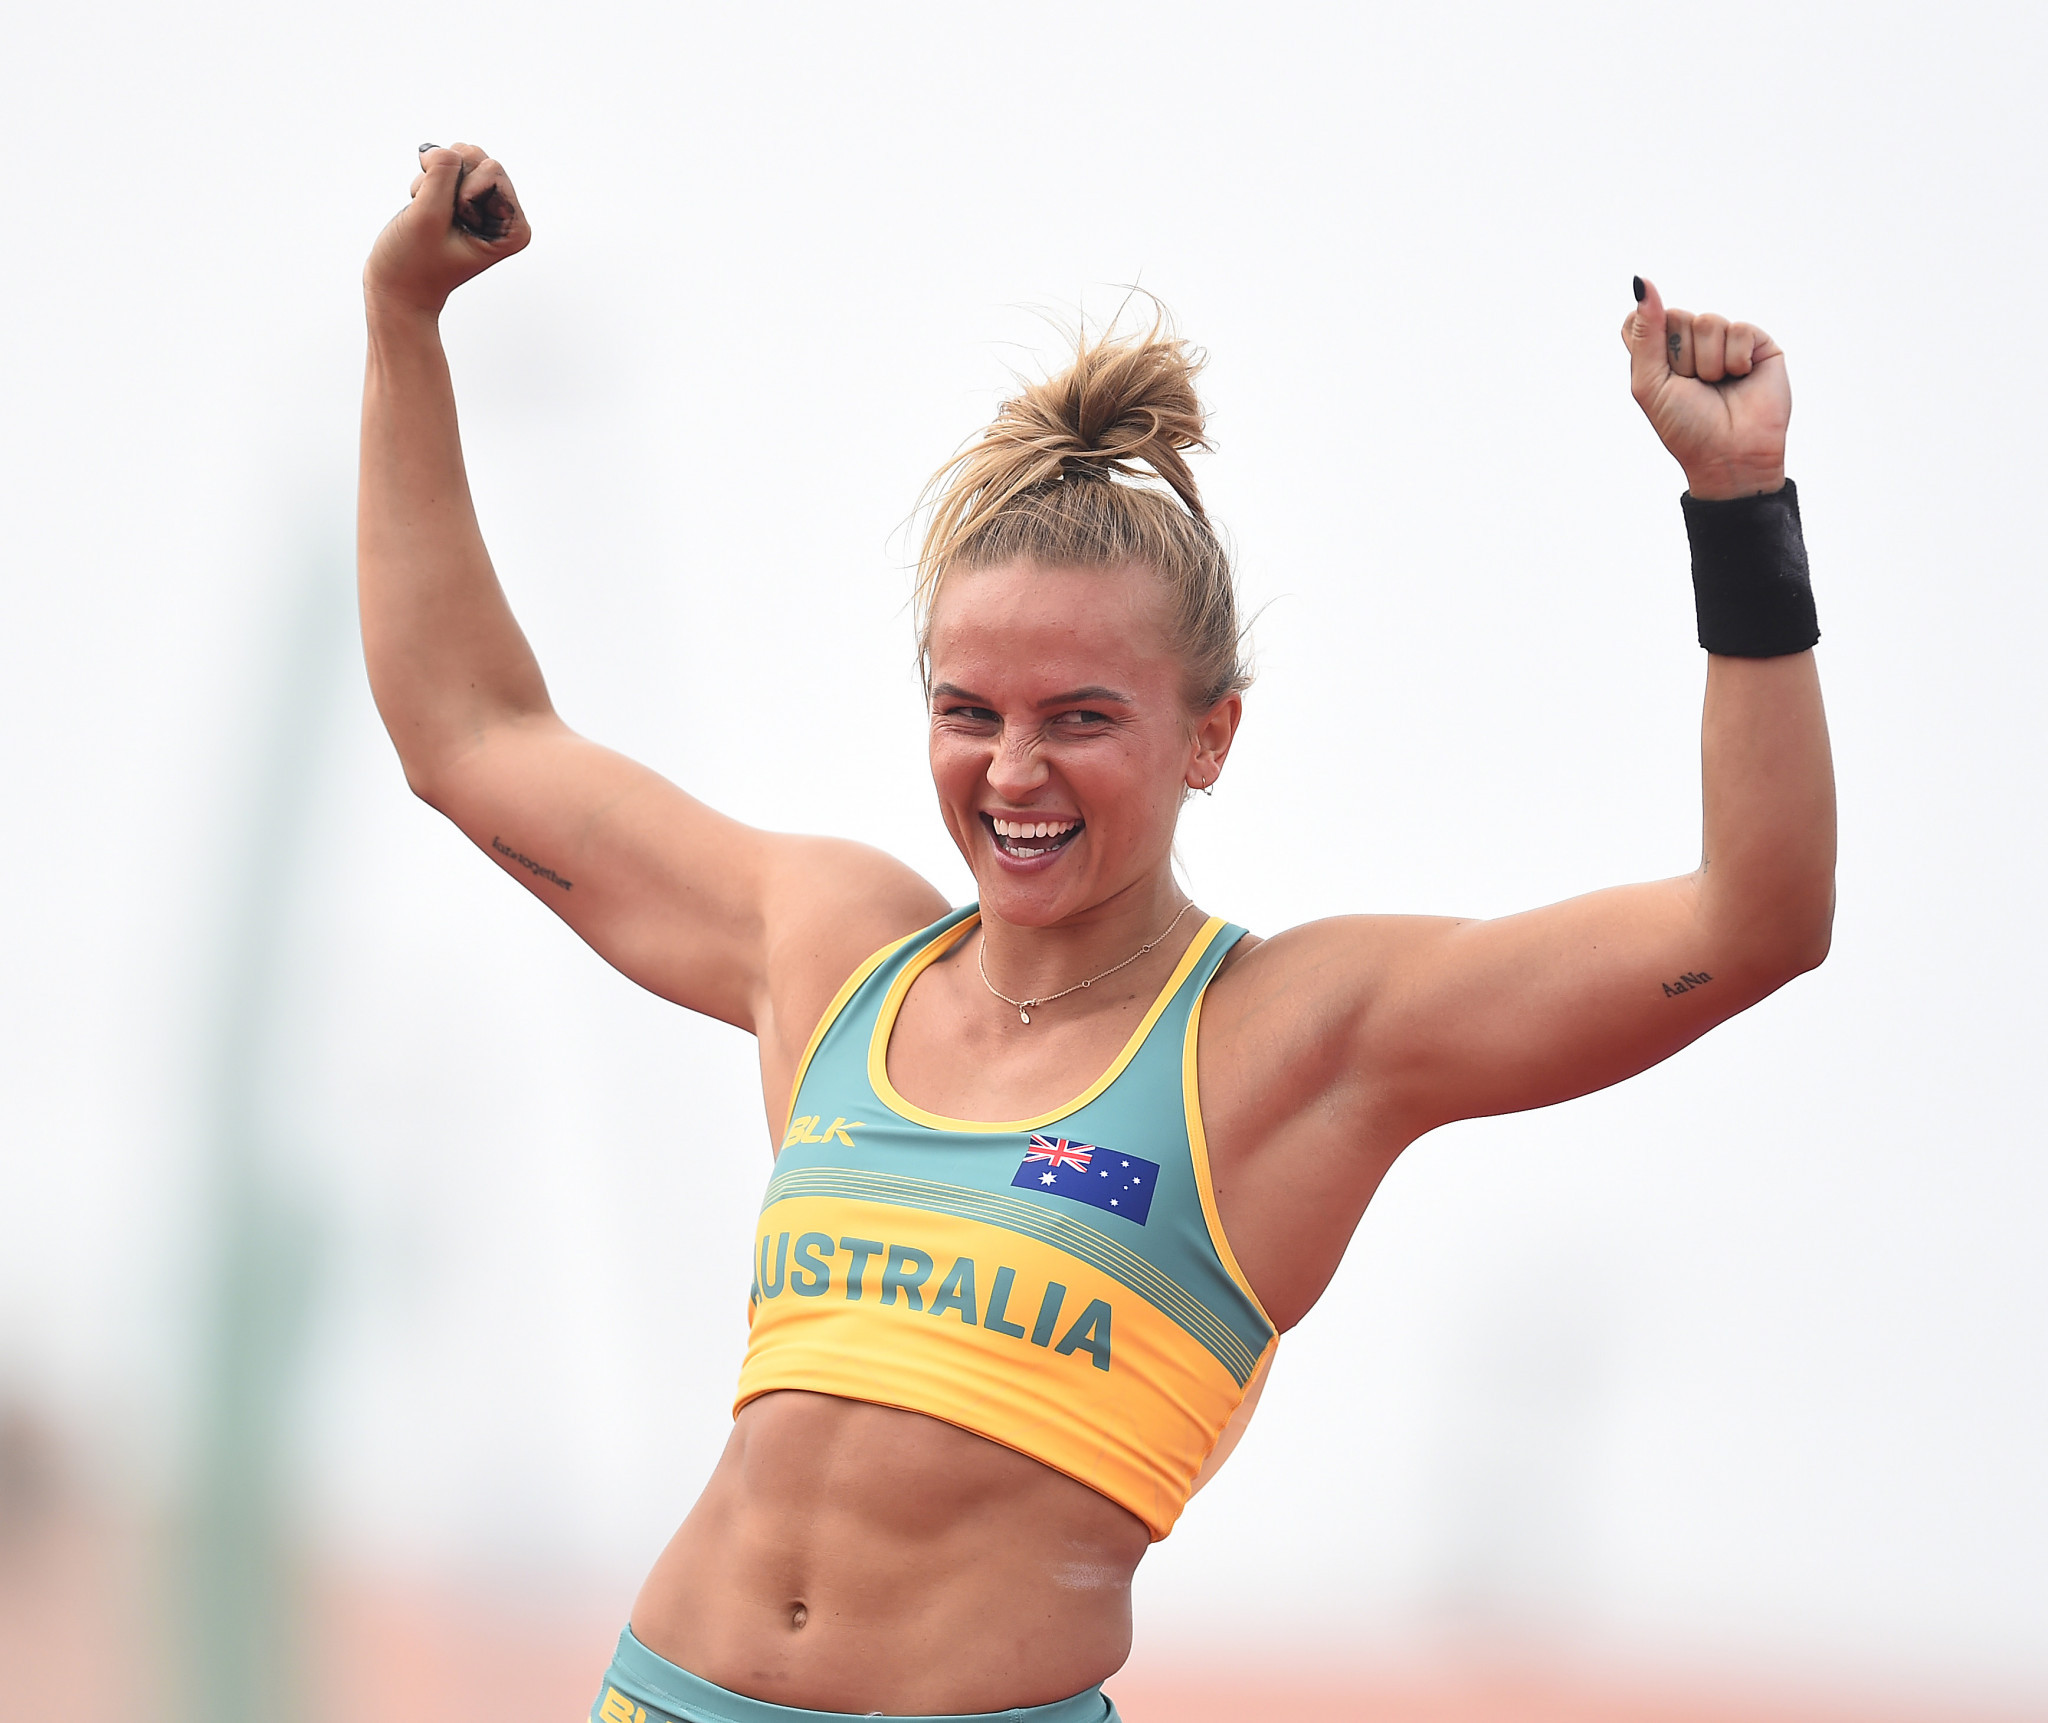 Australia's Parnova and New Zealand's Ratcliffe highlight final day of Oceania Athletics Championships